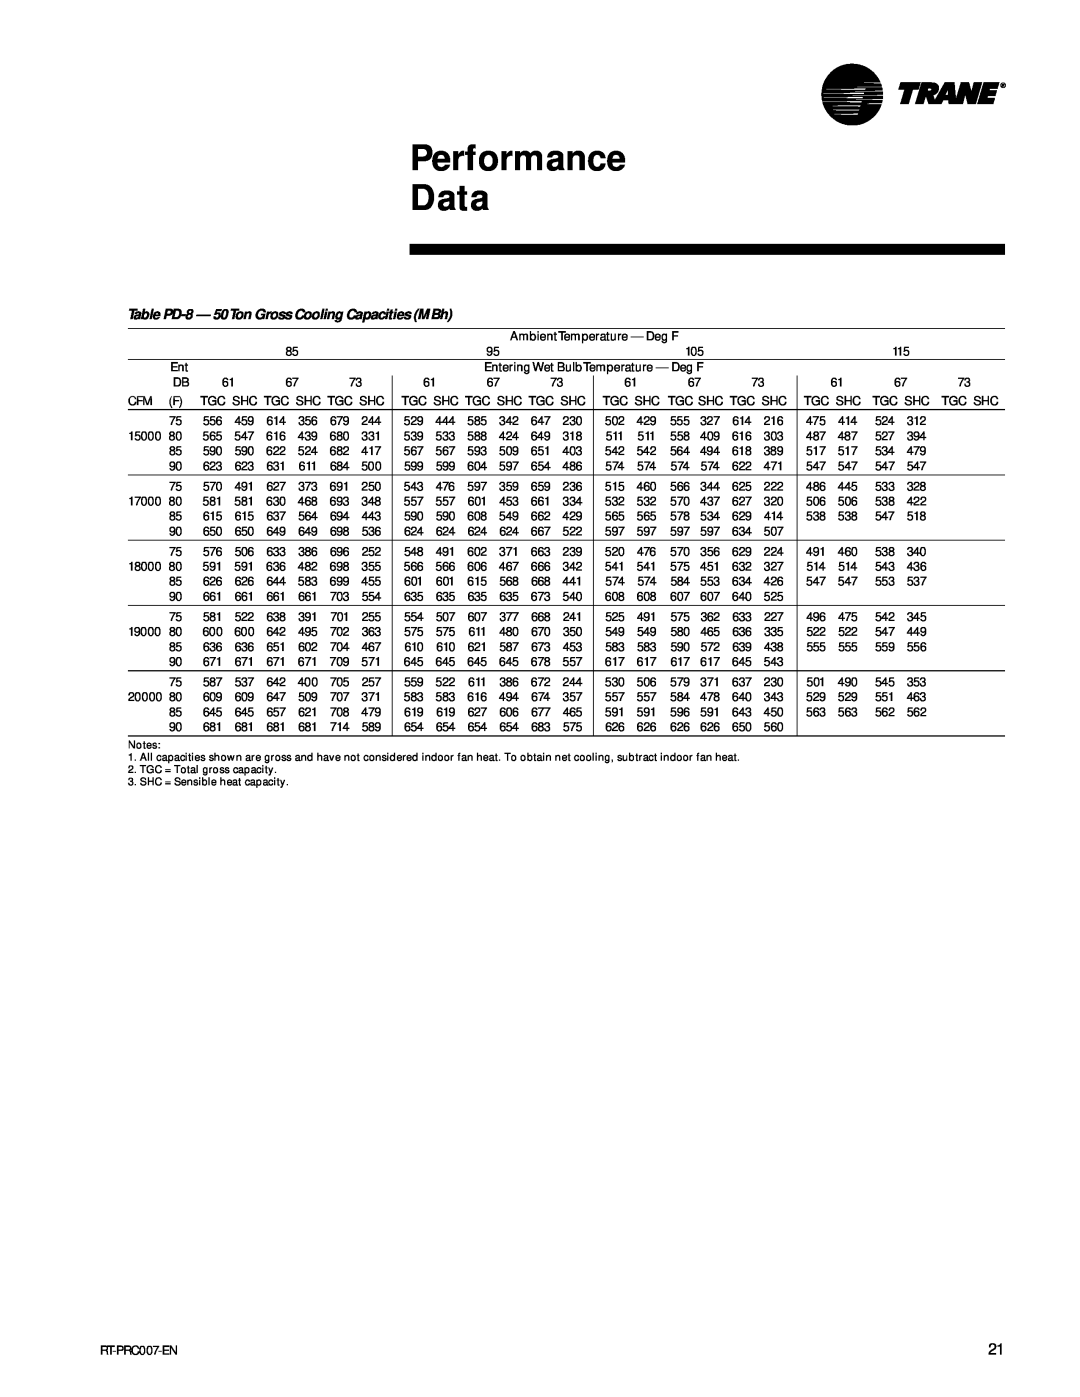 Trane RT-PRC007-EN manual Performance Data, Table PD-8- 50Ton Gross Cooling Capacities MBh 